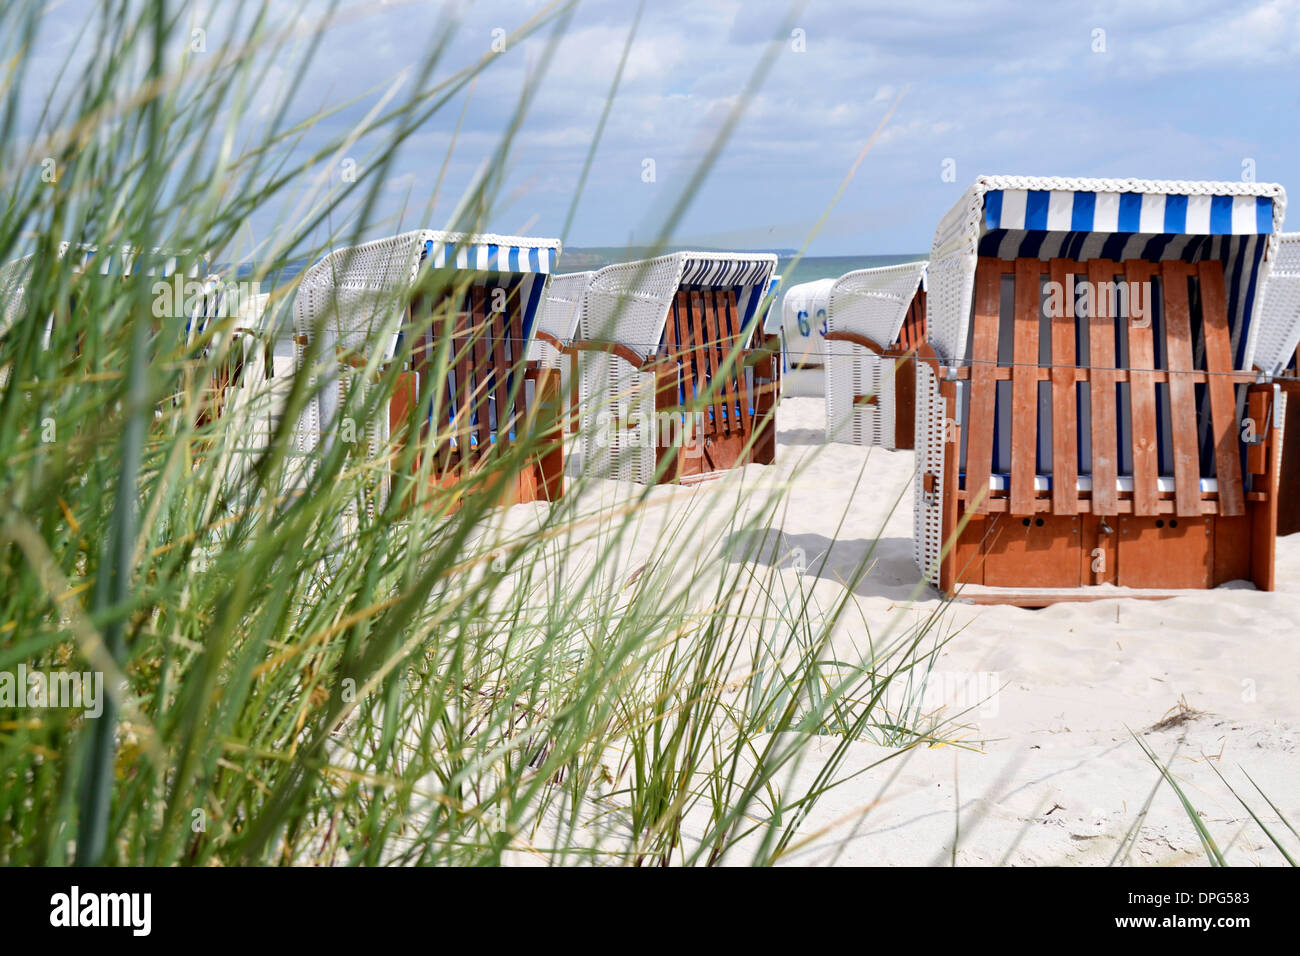 Beach chairs on the beach, Binz, Ruegen Island, Germany Stock Photo